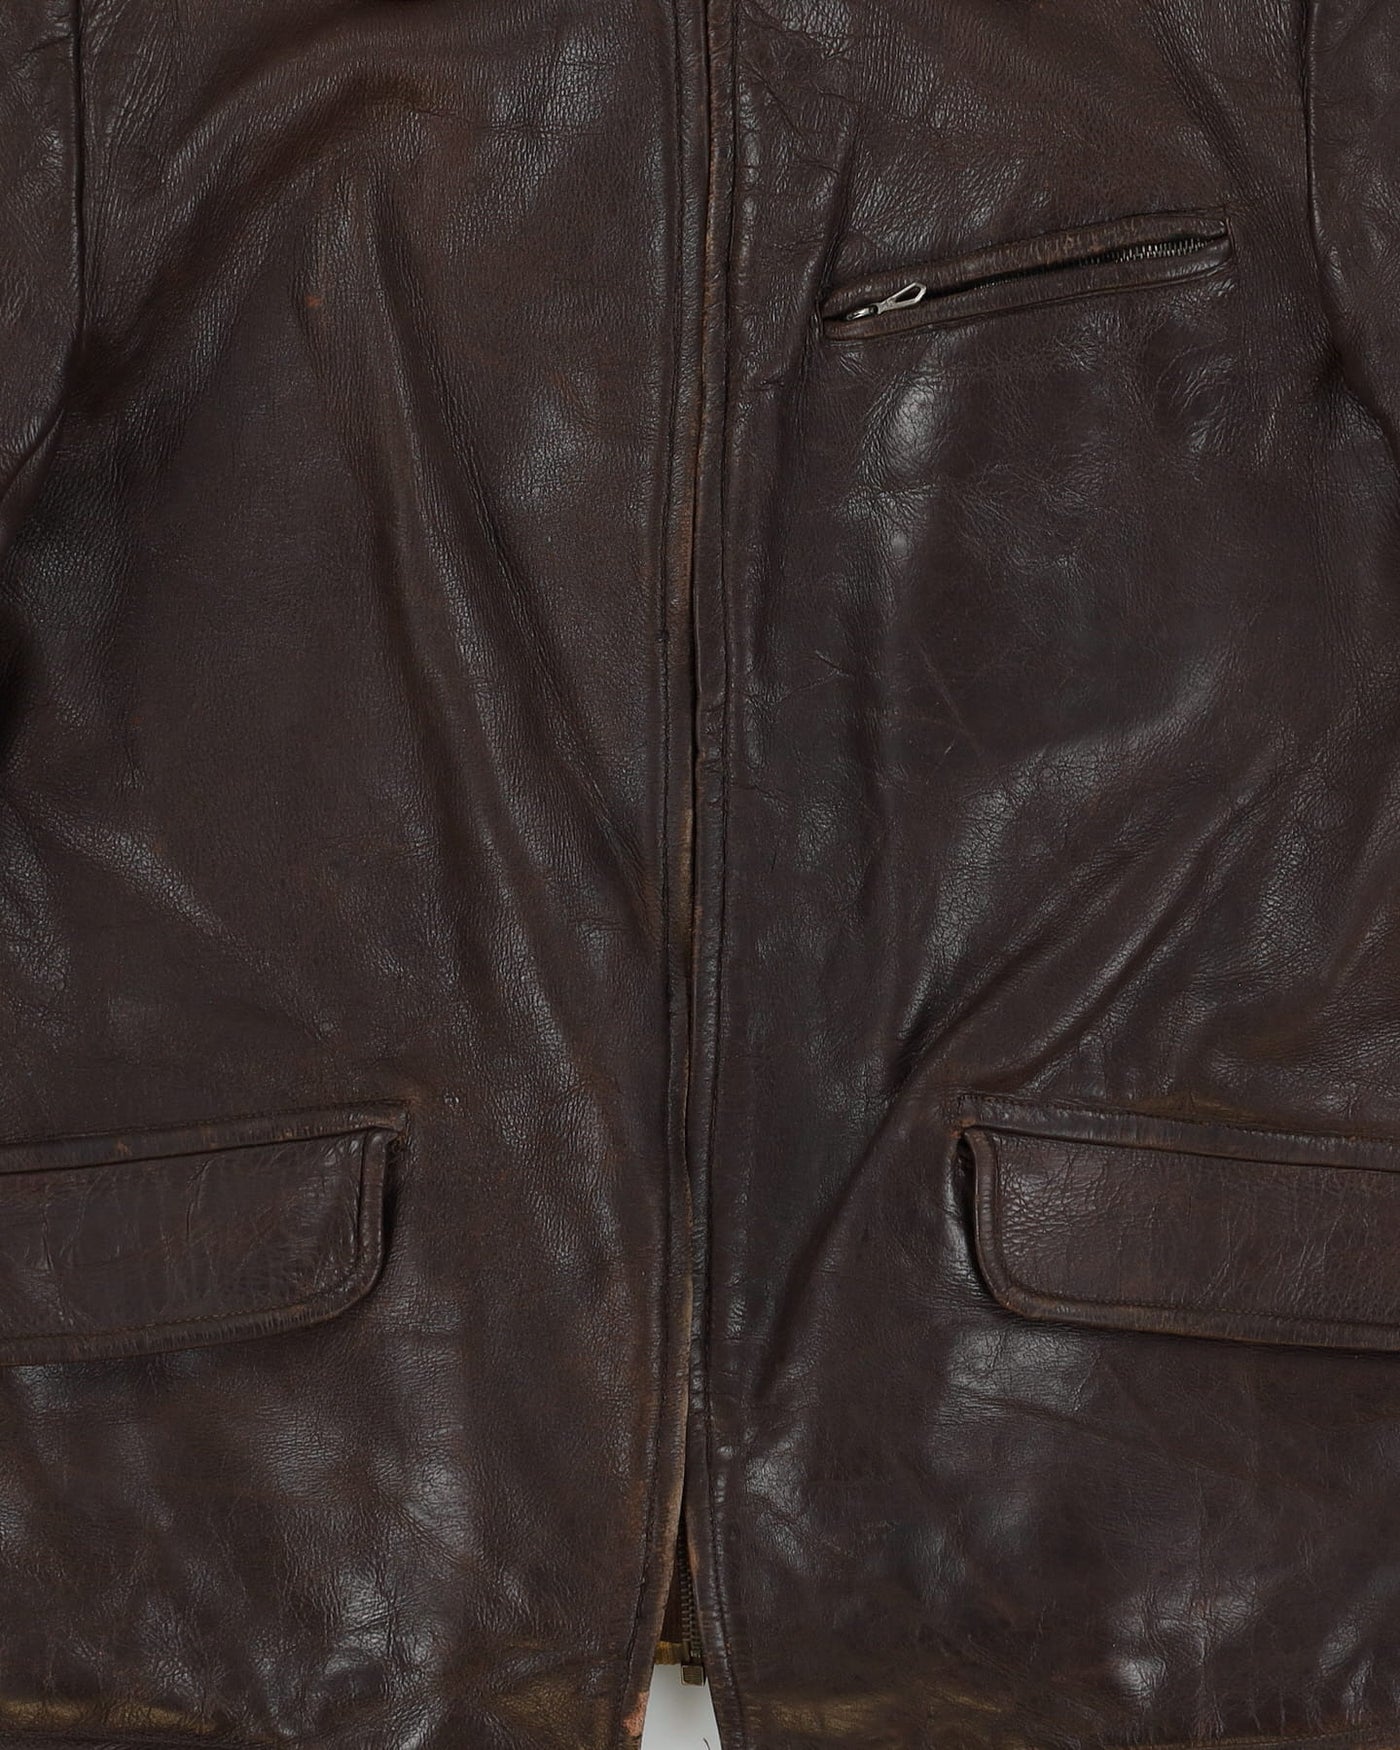 Vintage 1940s Brown Leather Jacket - S